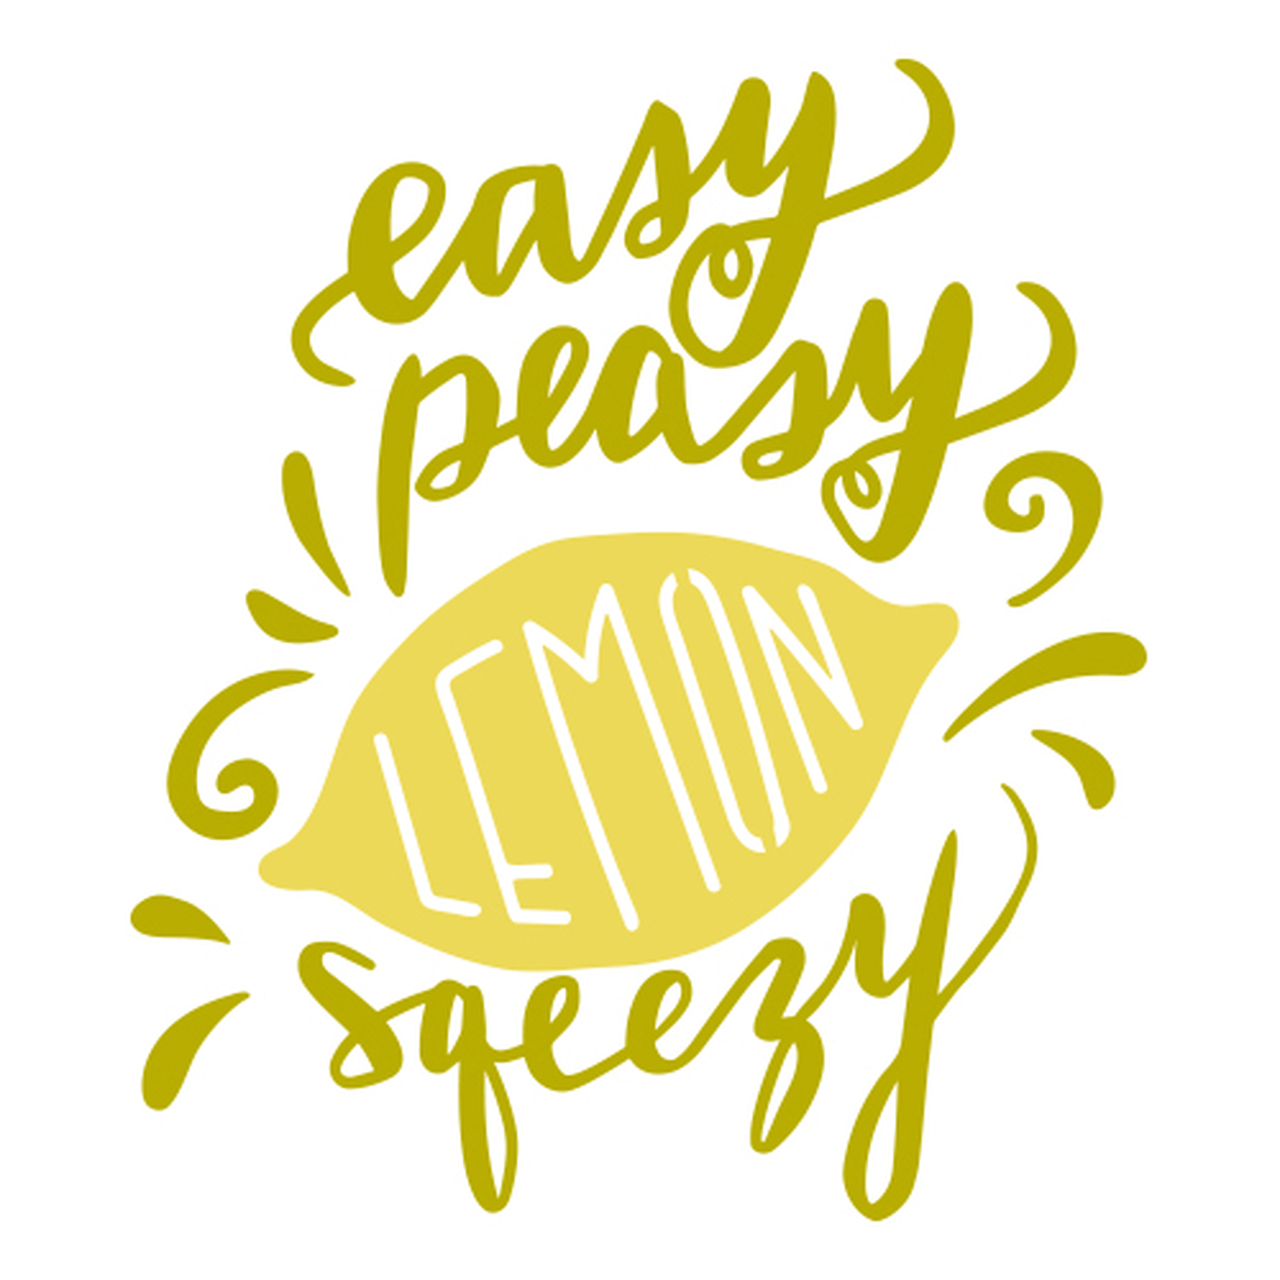 Easy peasy lemon squeezy has 3 repositories available. 